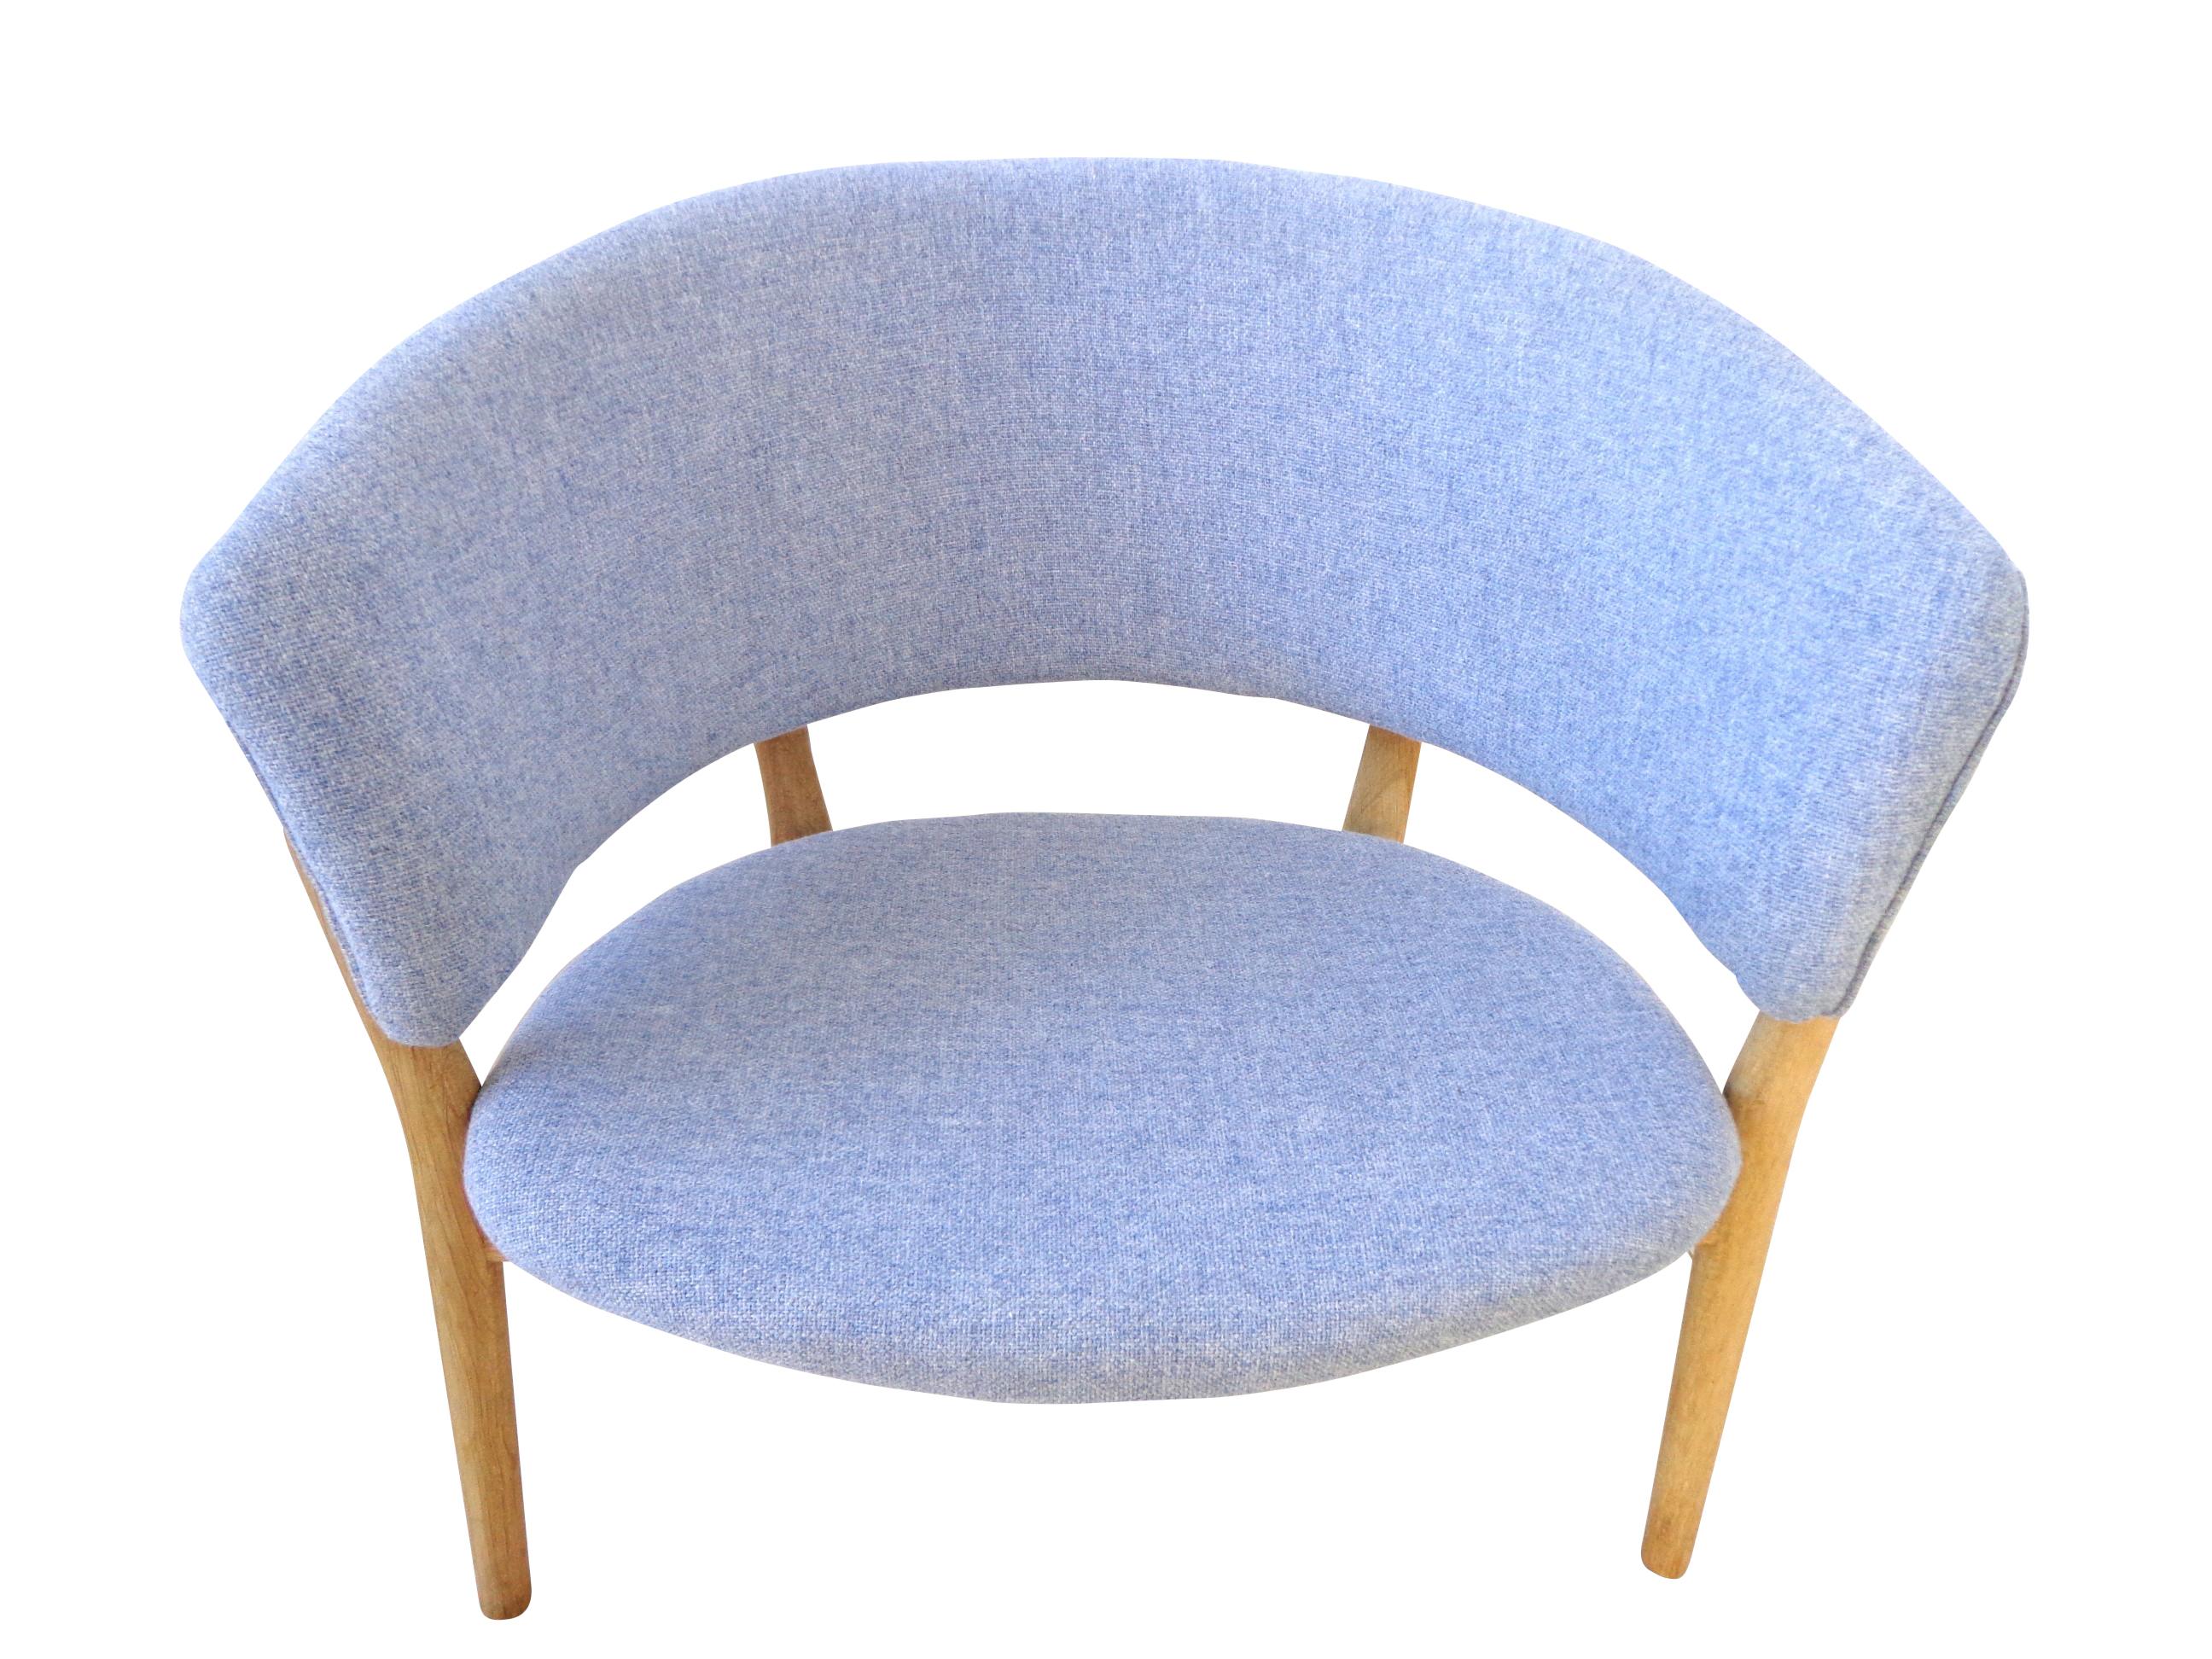 Nanna Ditzel Pair of Lounge Chairs in Wool by Soren Willadsen, Denmark, 1950s For Sale 4